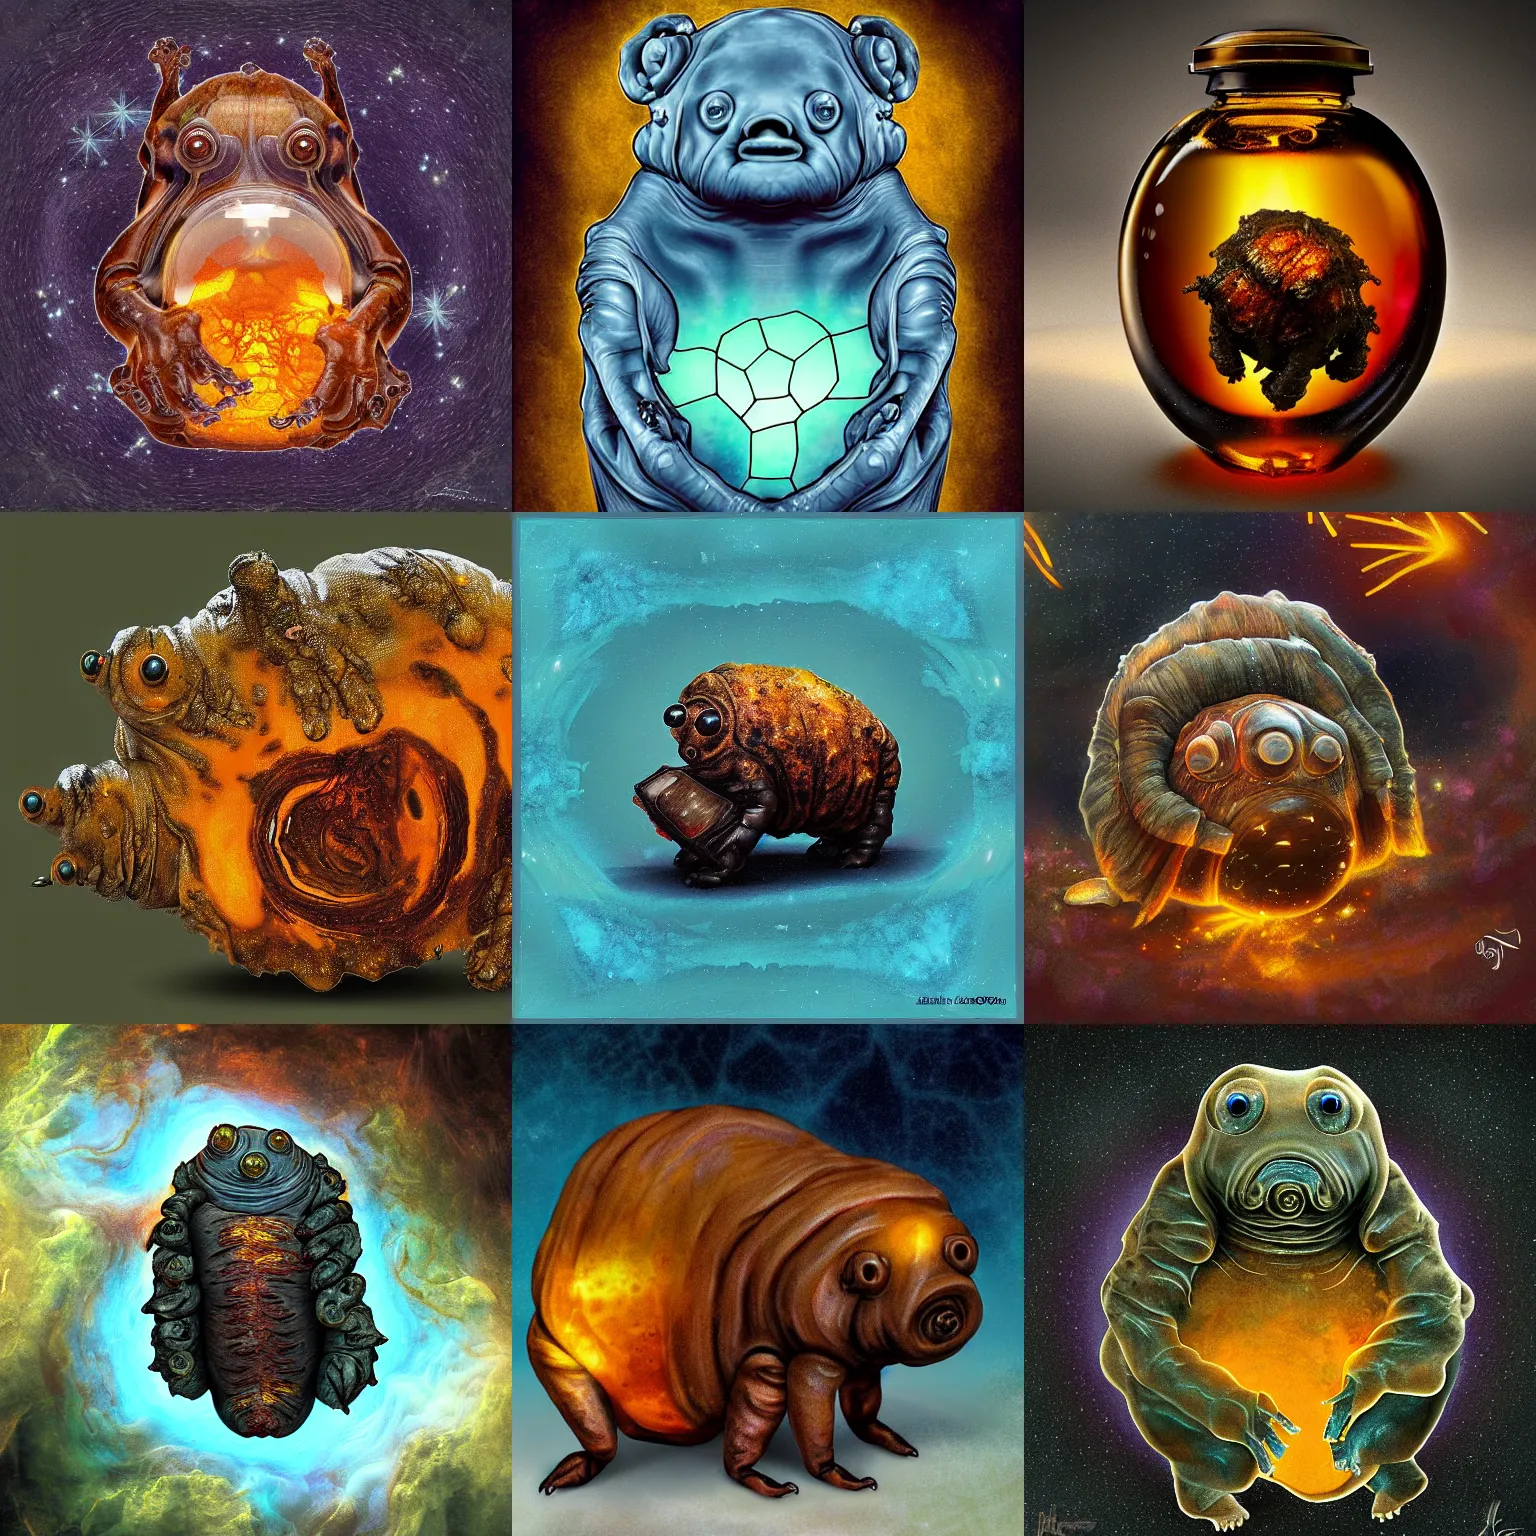 Prompt: A tardigrade preserved in amber resin, dark fantasy, digital art.